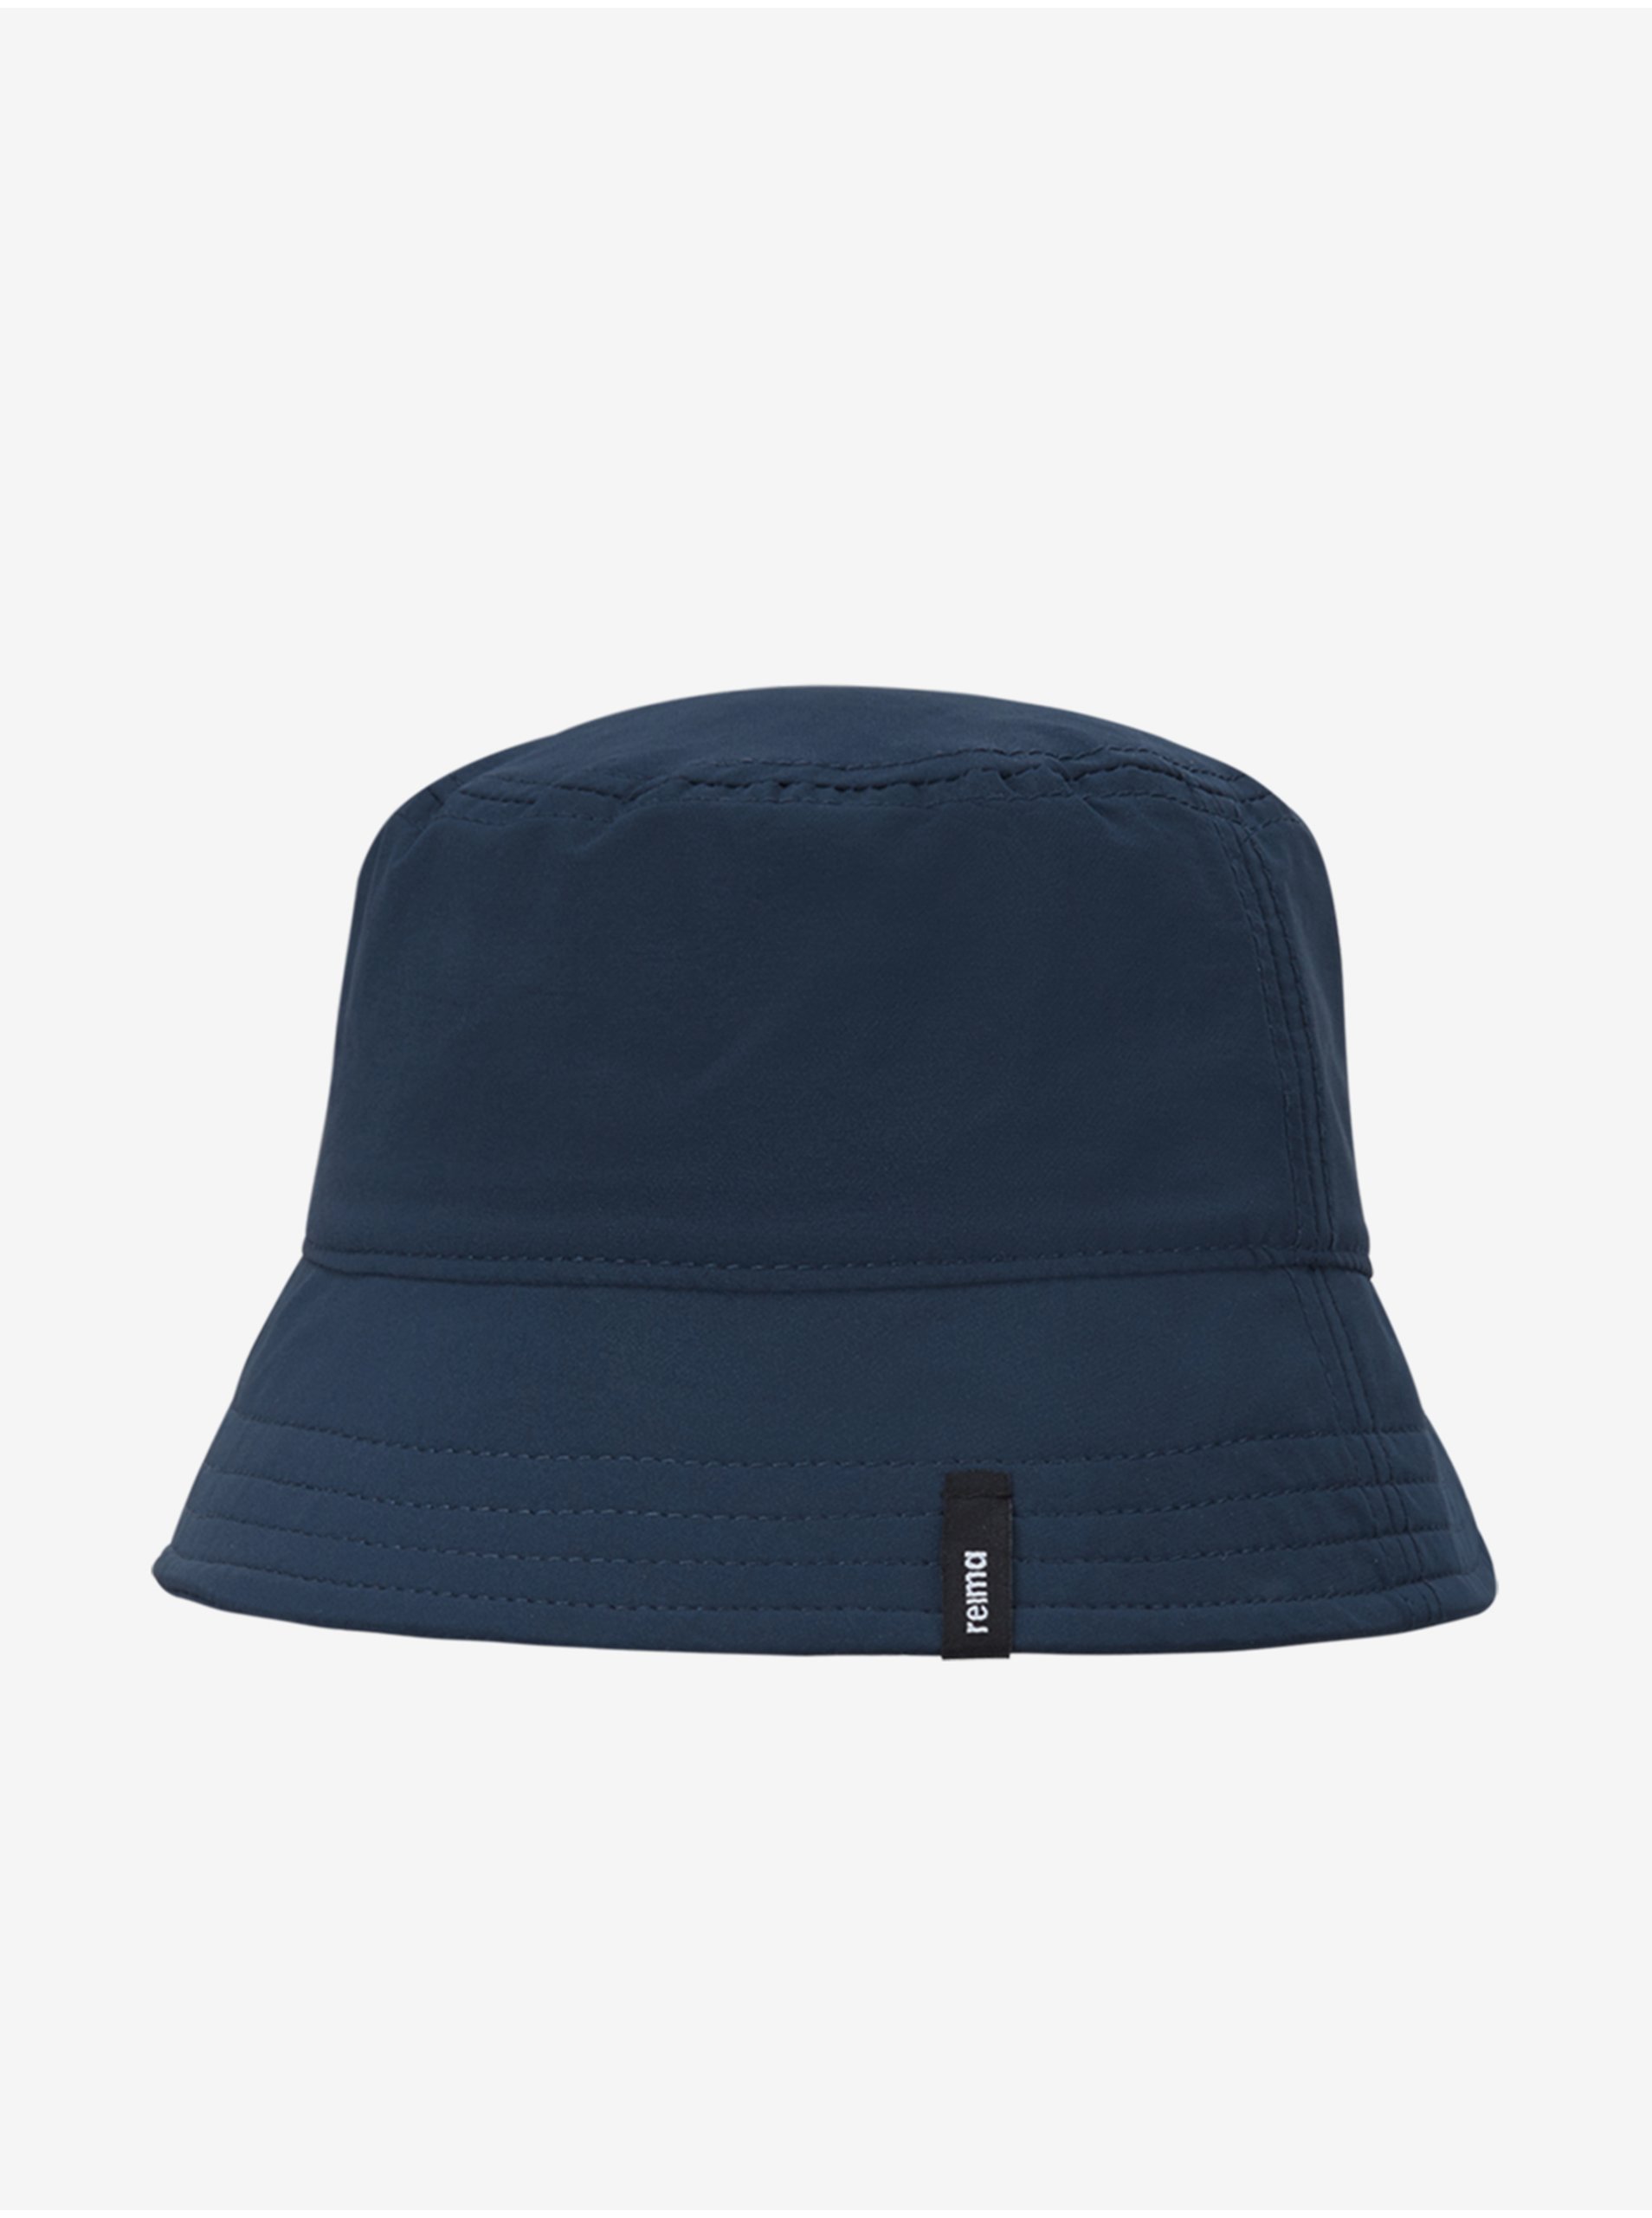 E-shop Tmavomodrý detský klobúk Reima Itikka